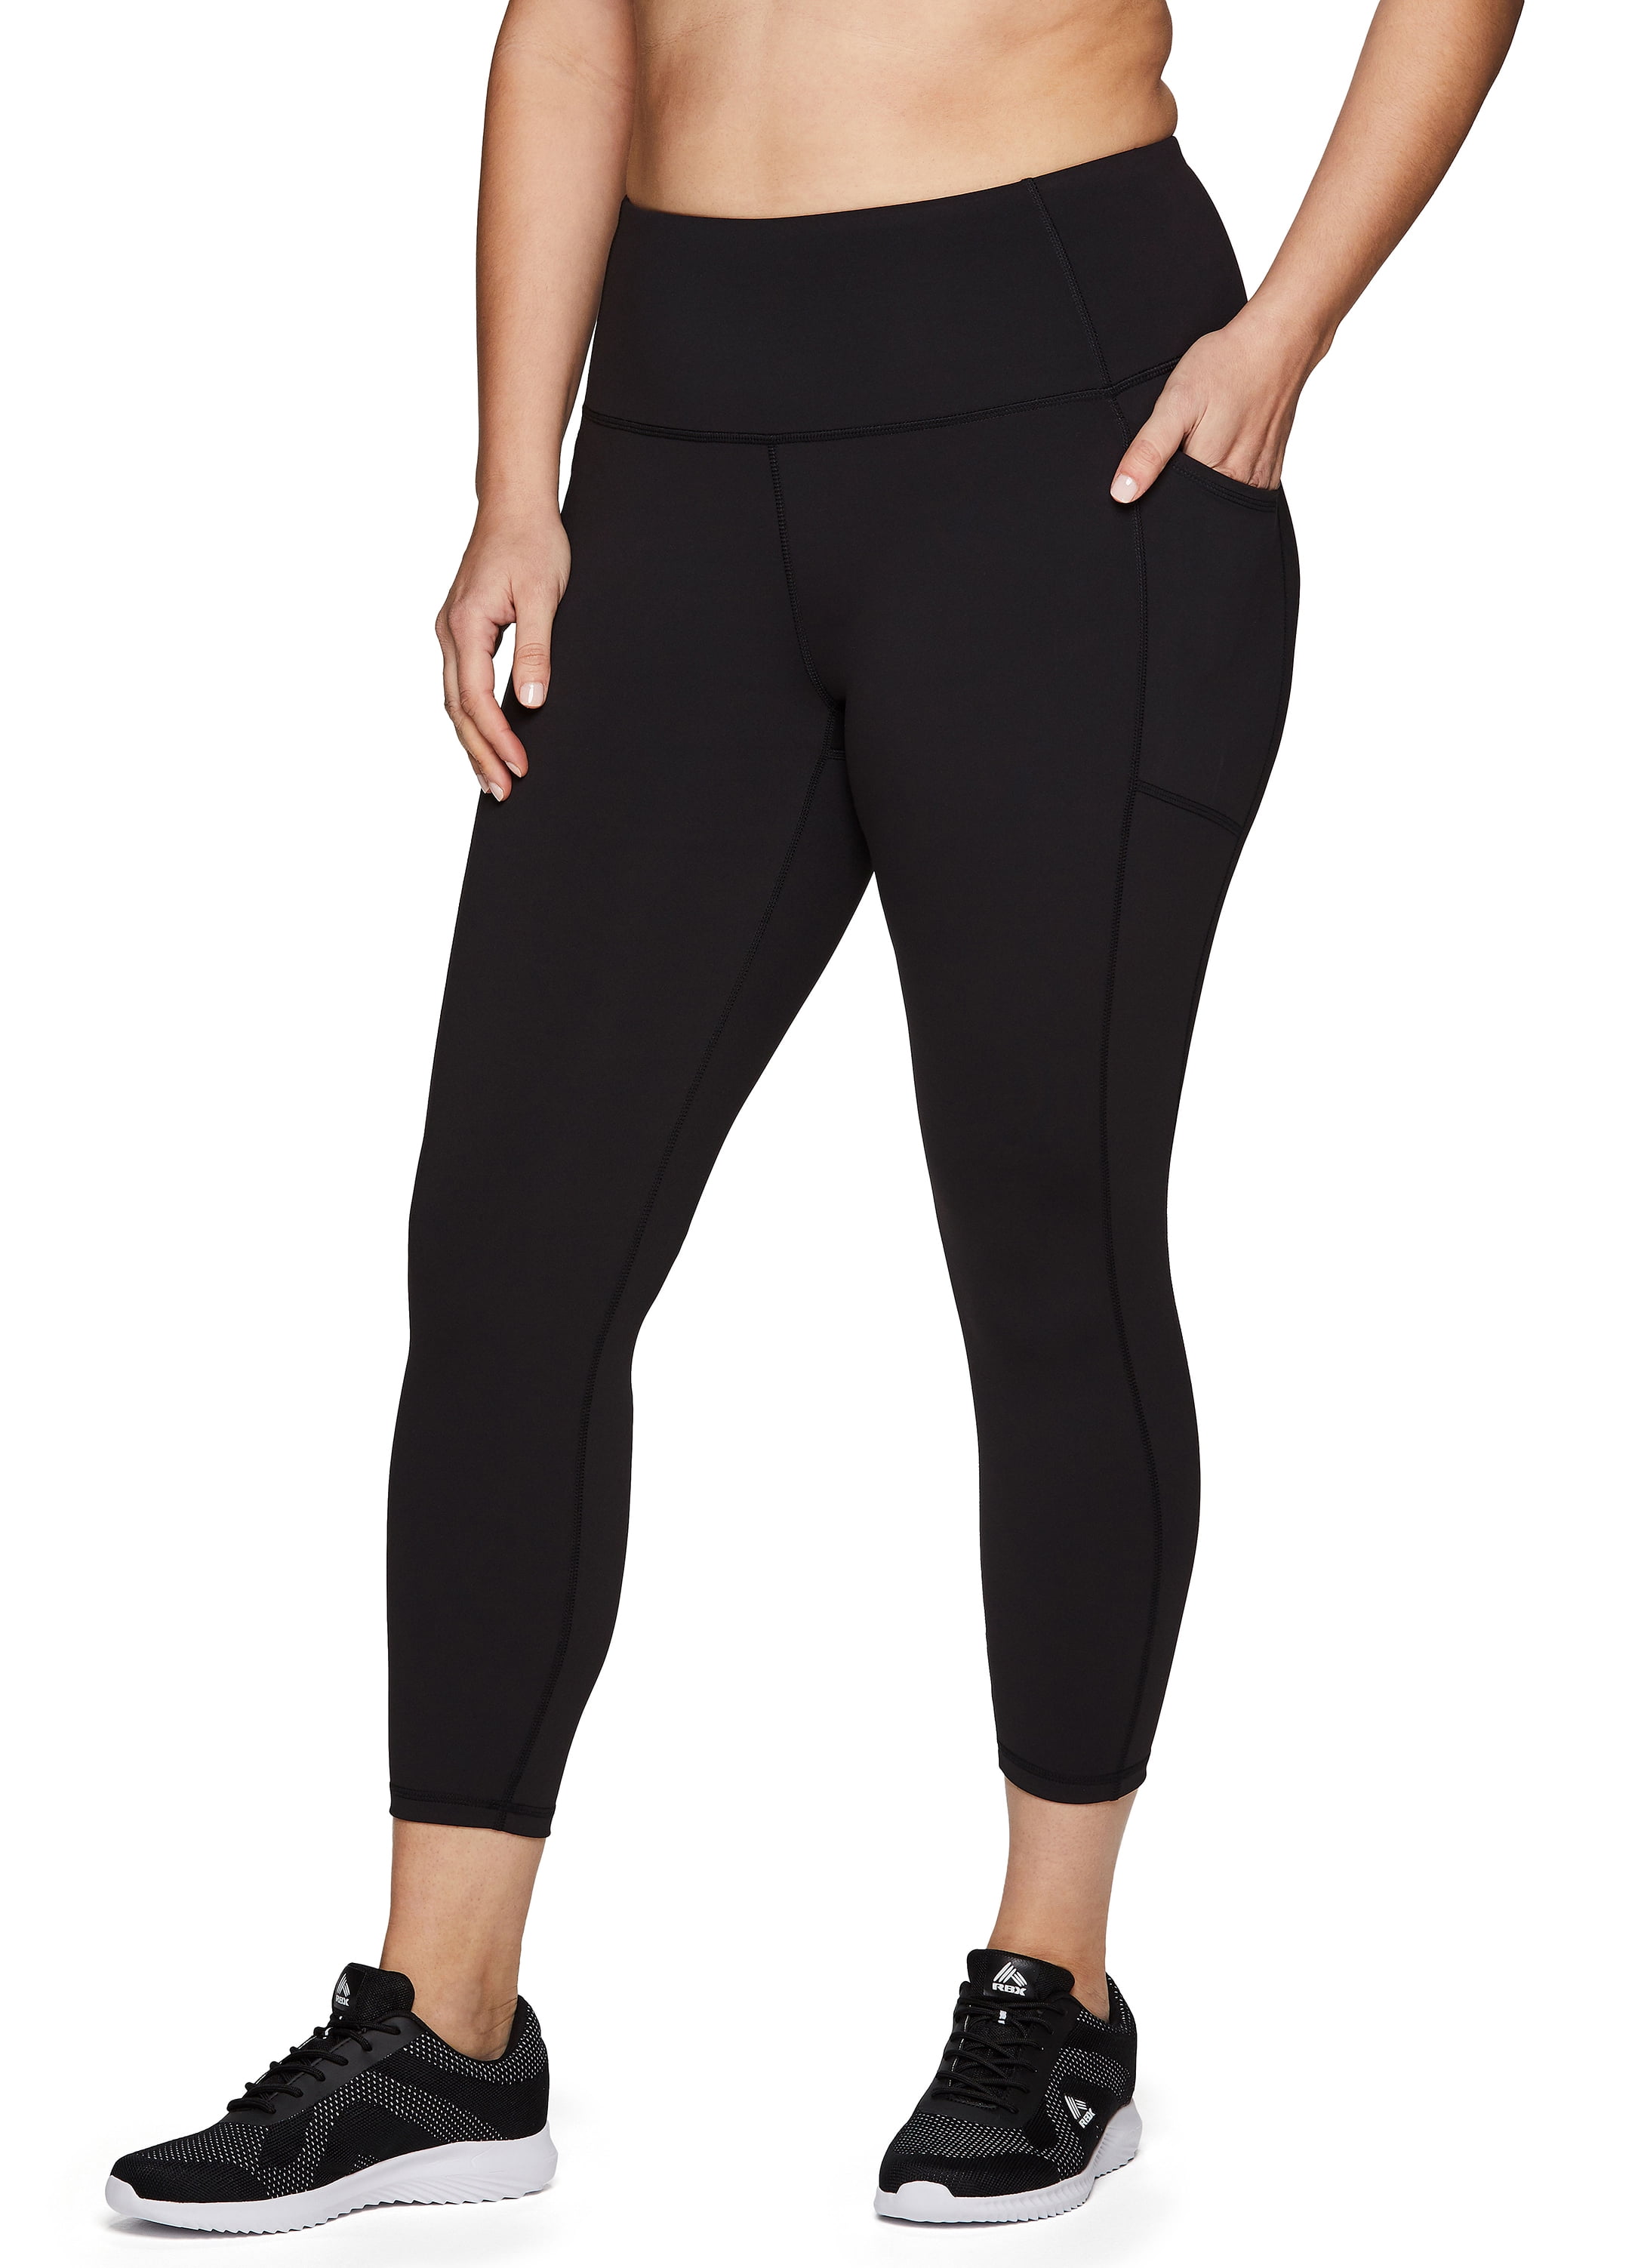 RBX Active Women's Squat Proof High Waist Full Length Workout Pants Sz S Black 